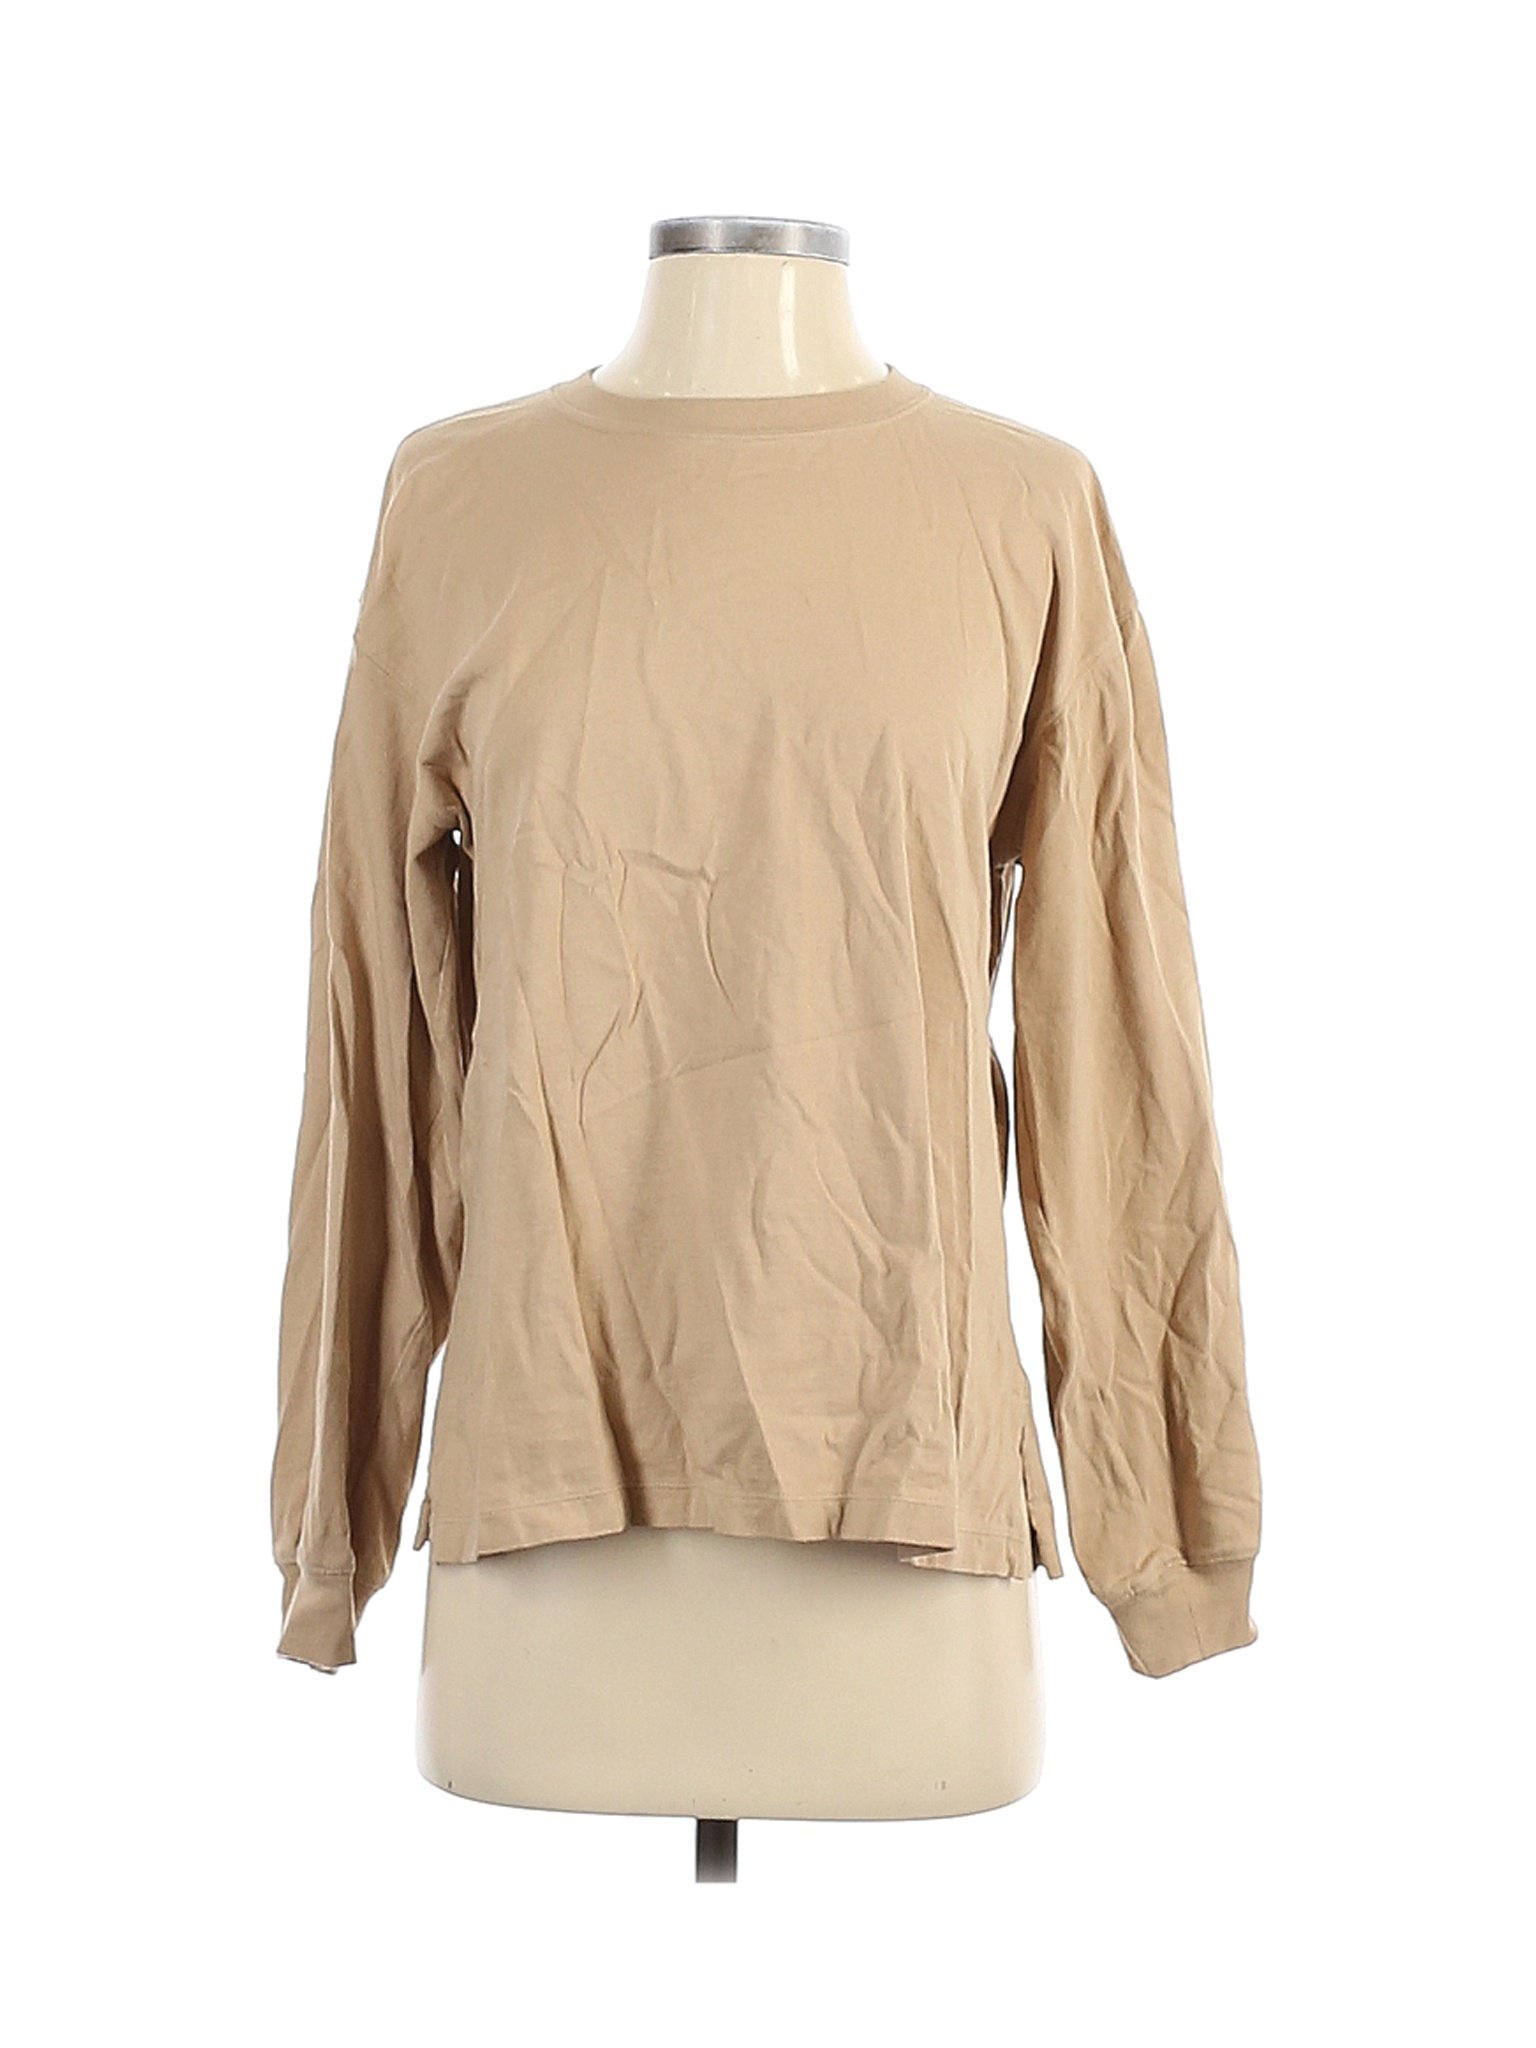 Uniqlo Women Brown Long Sleeve T-Shirt S | eBay